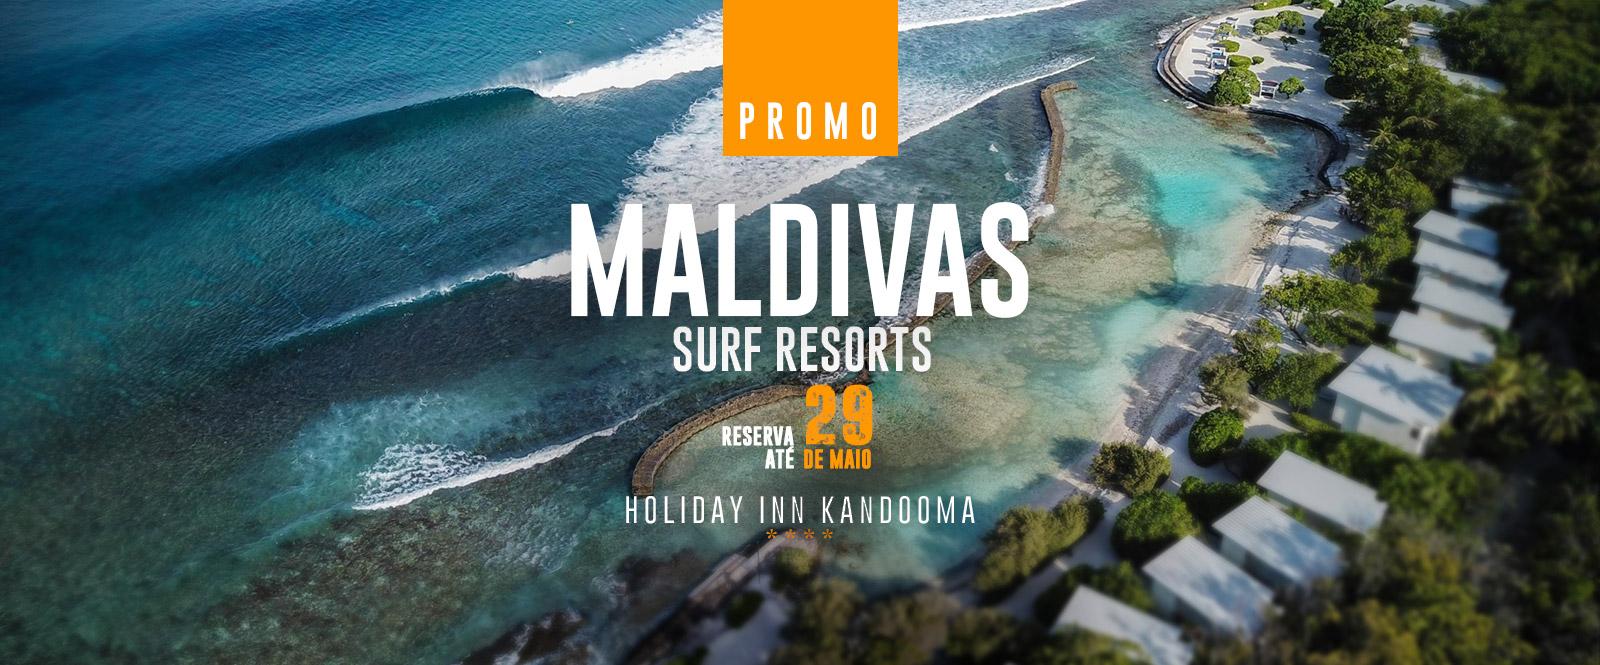 Promo Maldivas Resorts HOLIDAY INN KANDOOMA